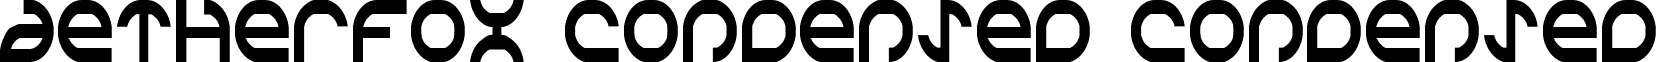 Aetherfox Condensed Condensed font - Aetherfox Condensed Condensed.ttf